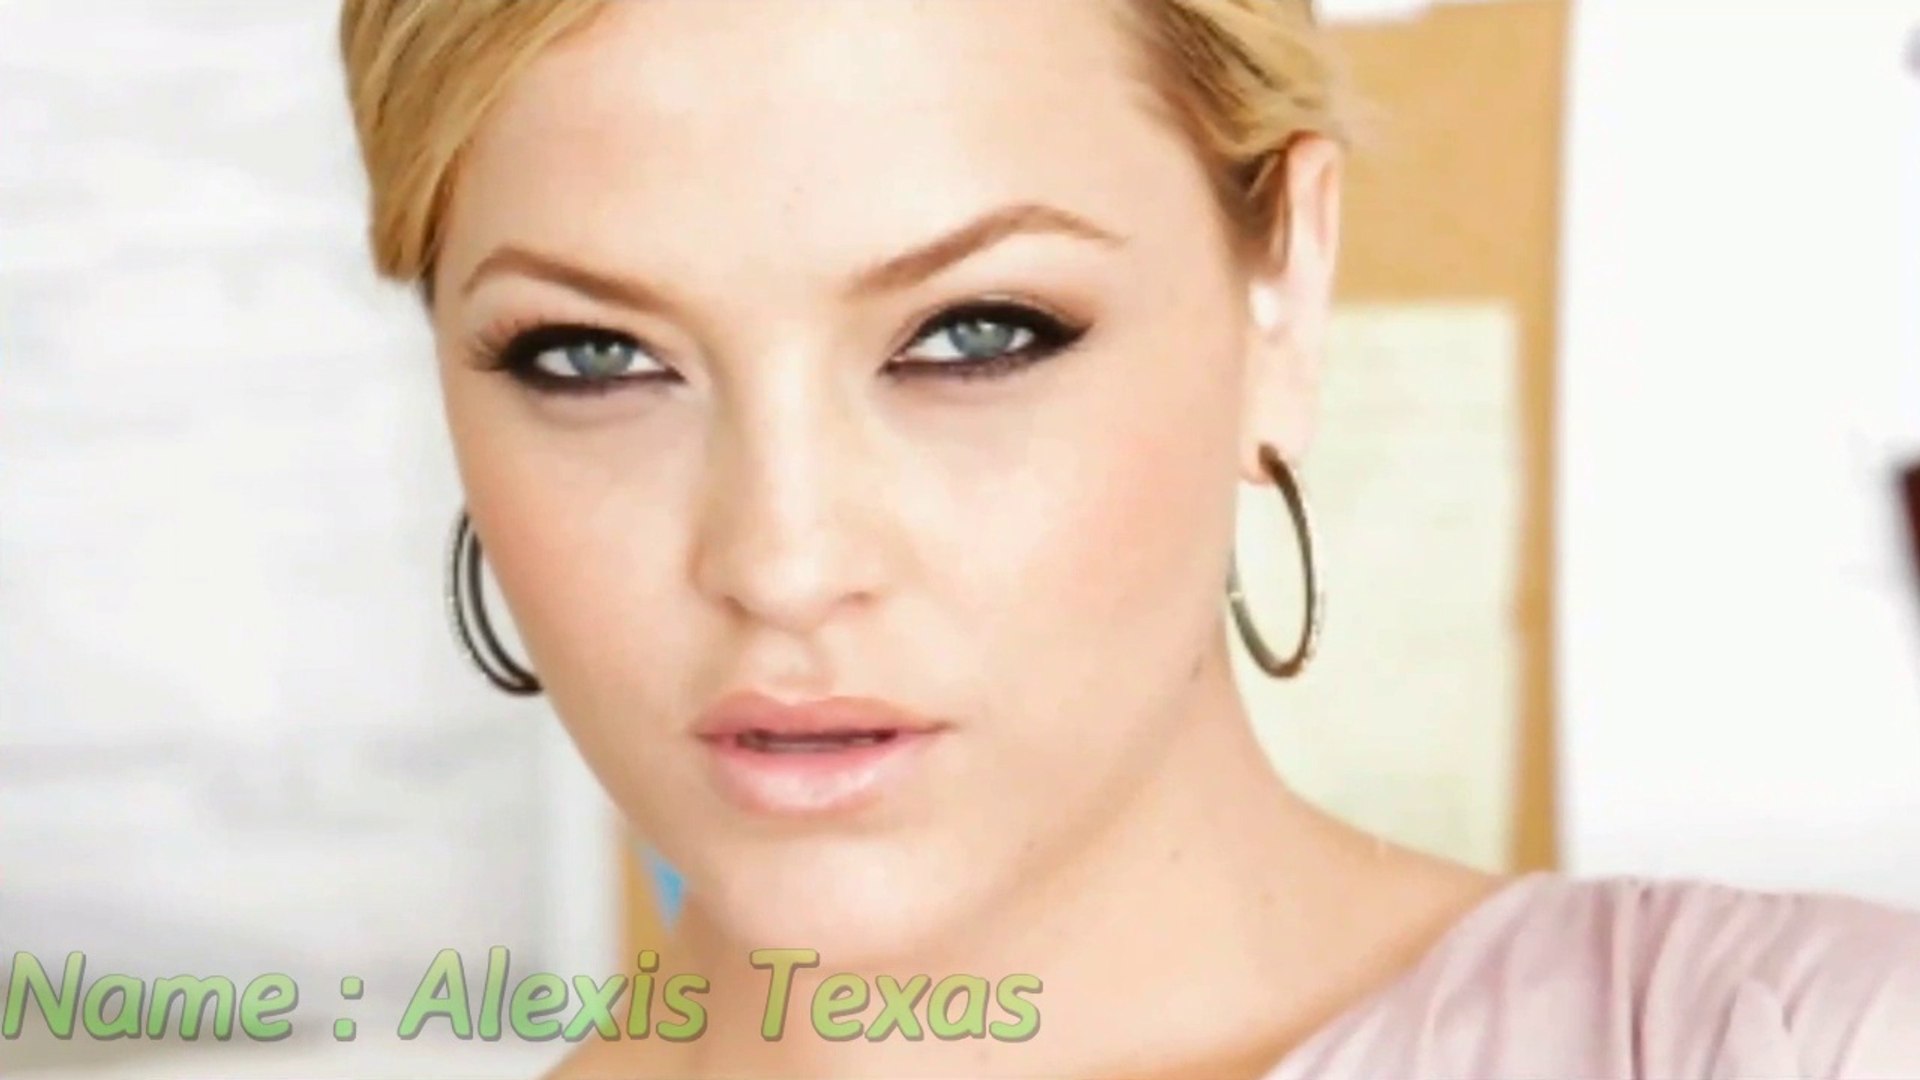 Family alexis texas Alexis Texas